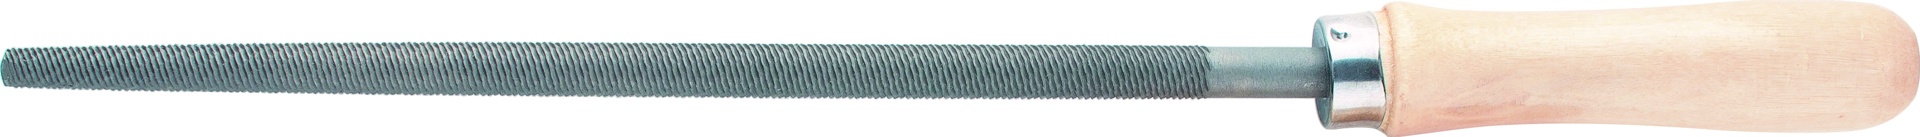 Turpija okrugla 200mm, sa drvenom drškom Sibrtex 16126 (SIB 16126)